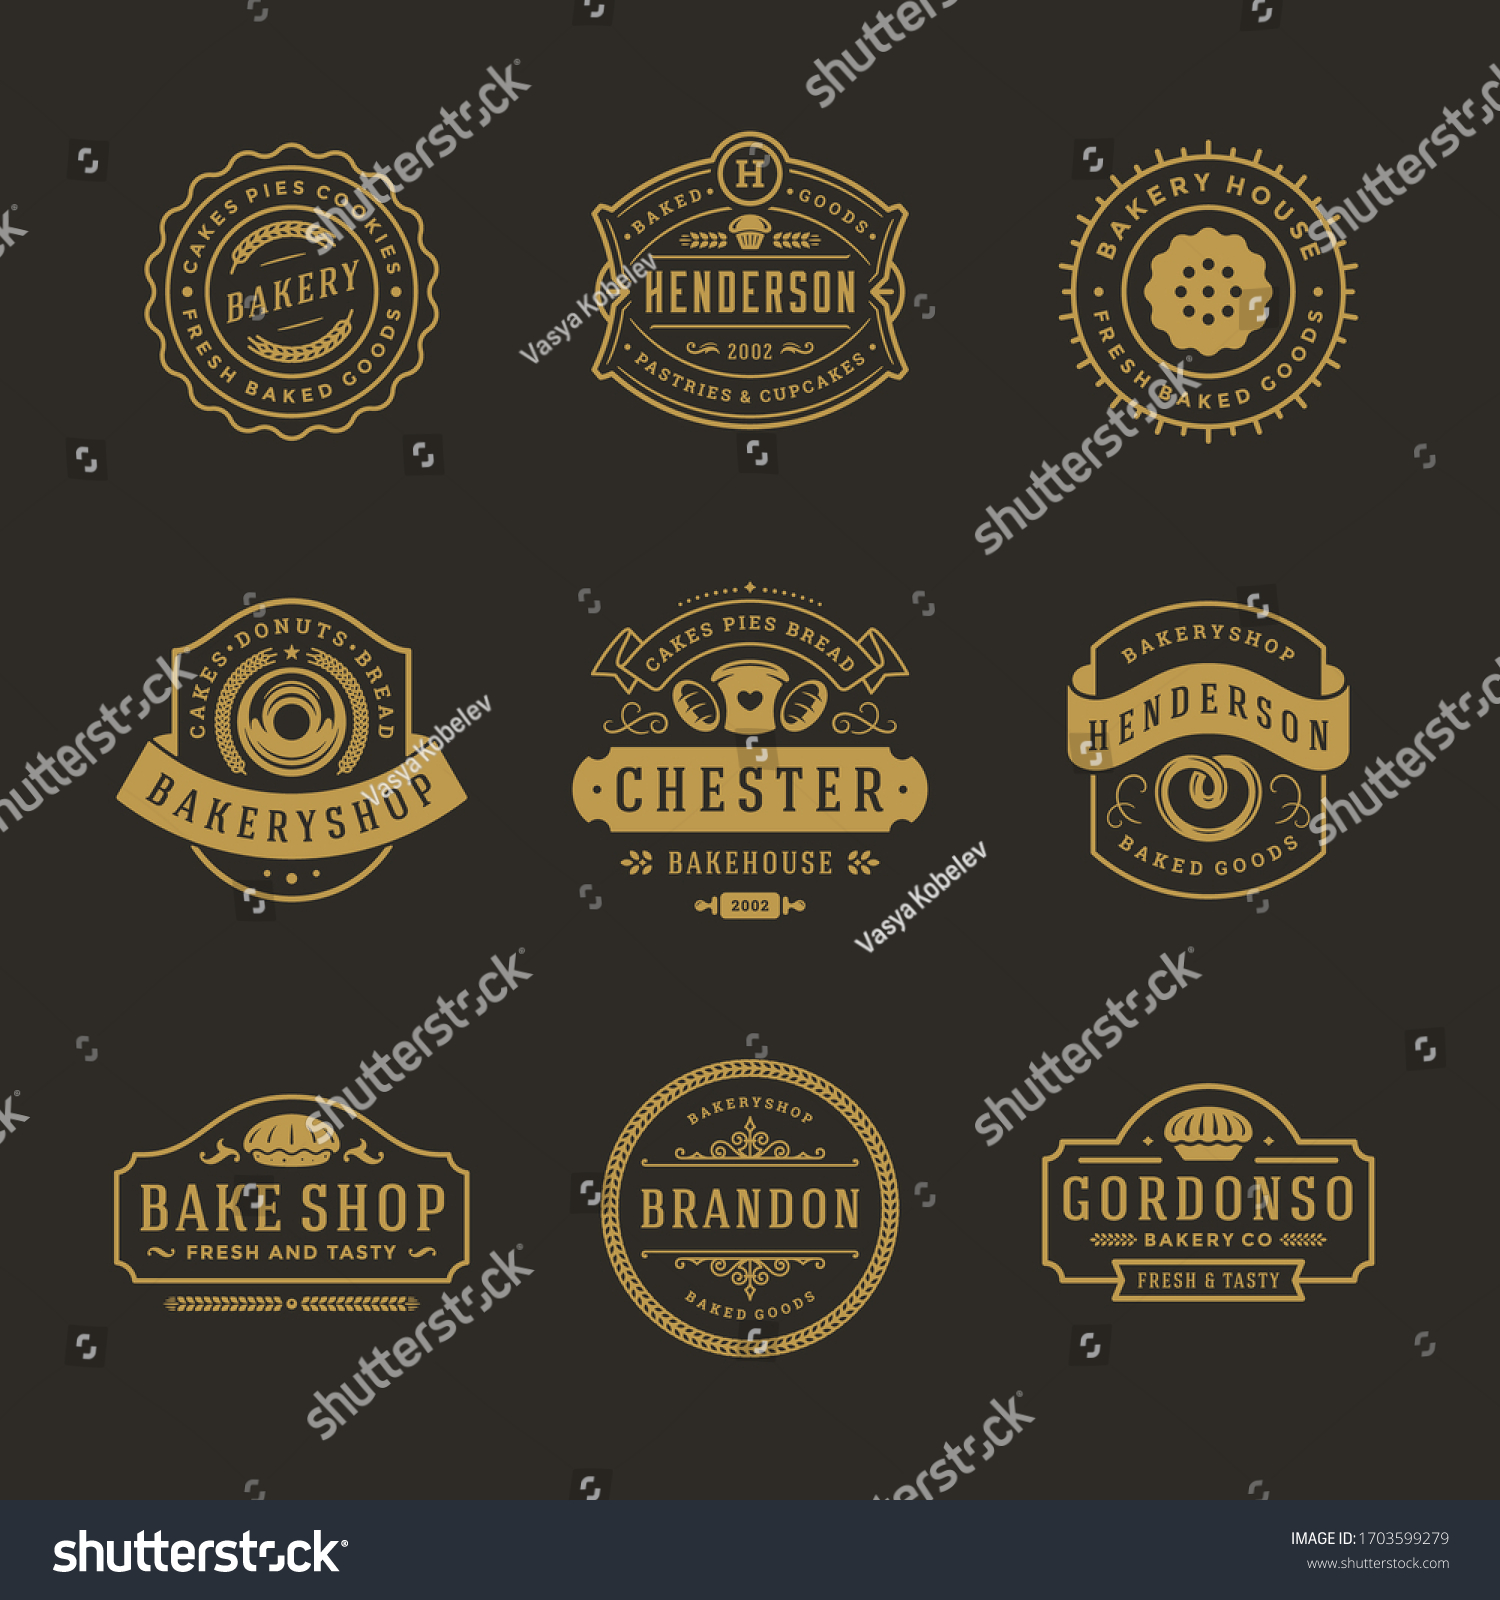 33,715 Bakery emblem logo Images, Stock Photos & Vectors | Shutterstock